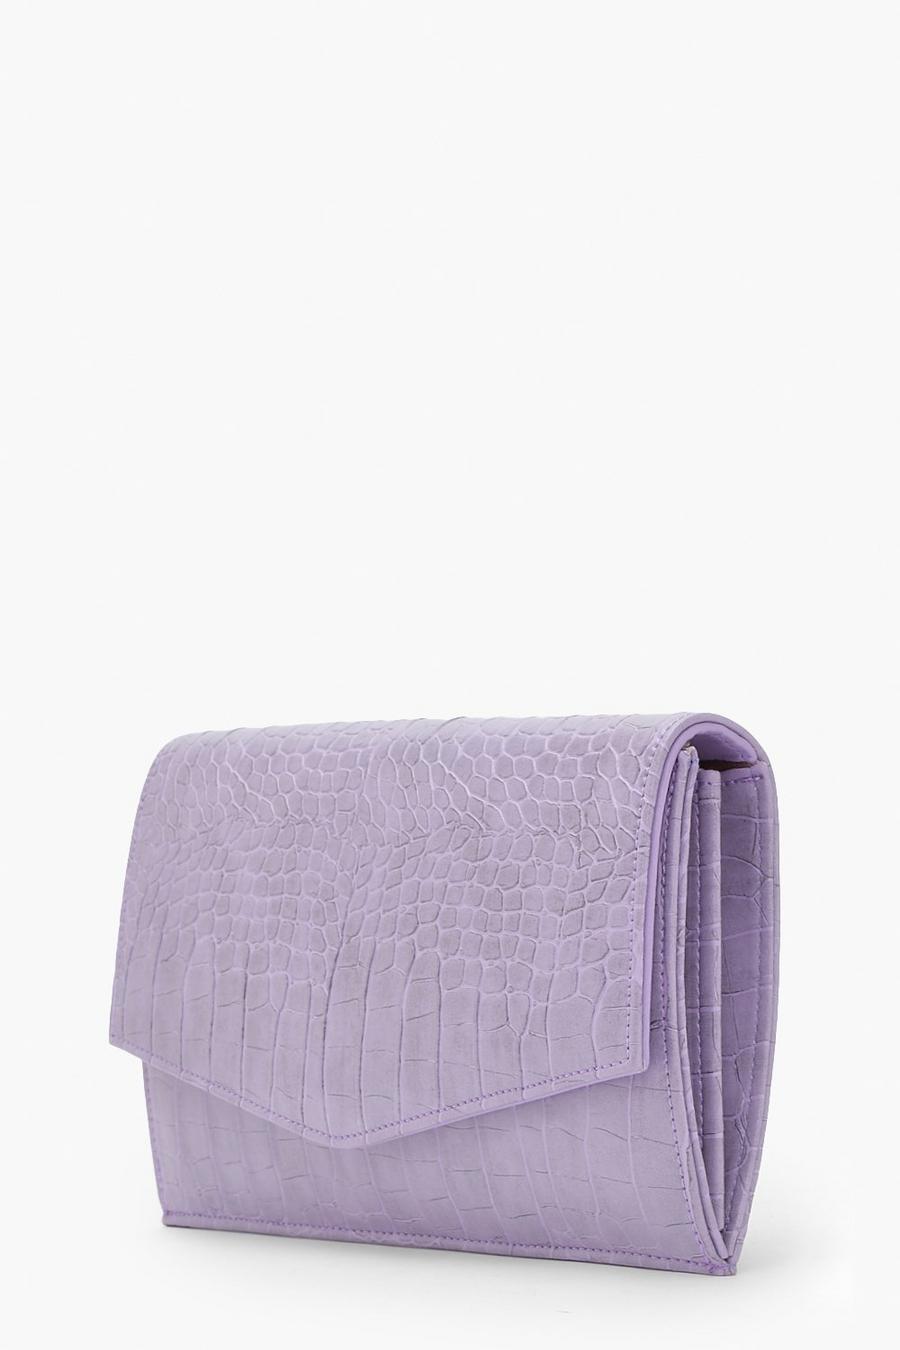 Lilac purple Croc Envelope Mini Clutch